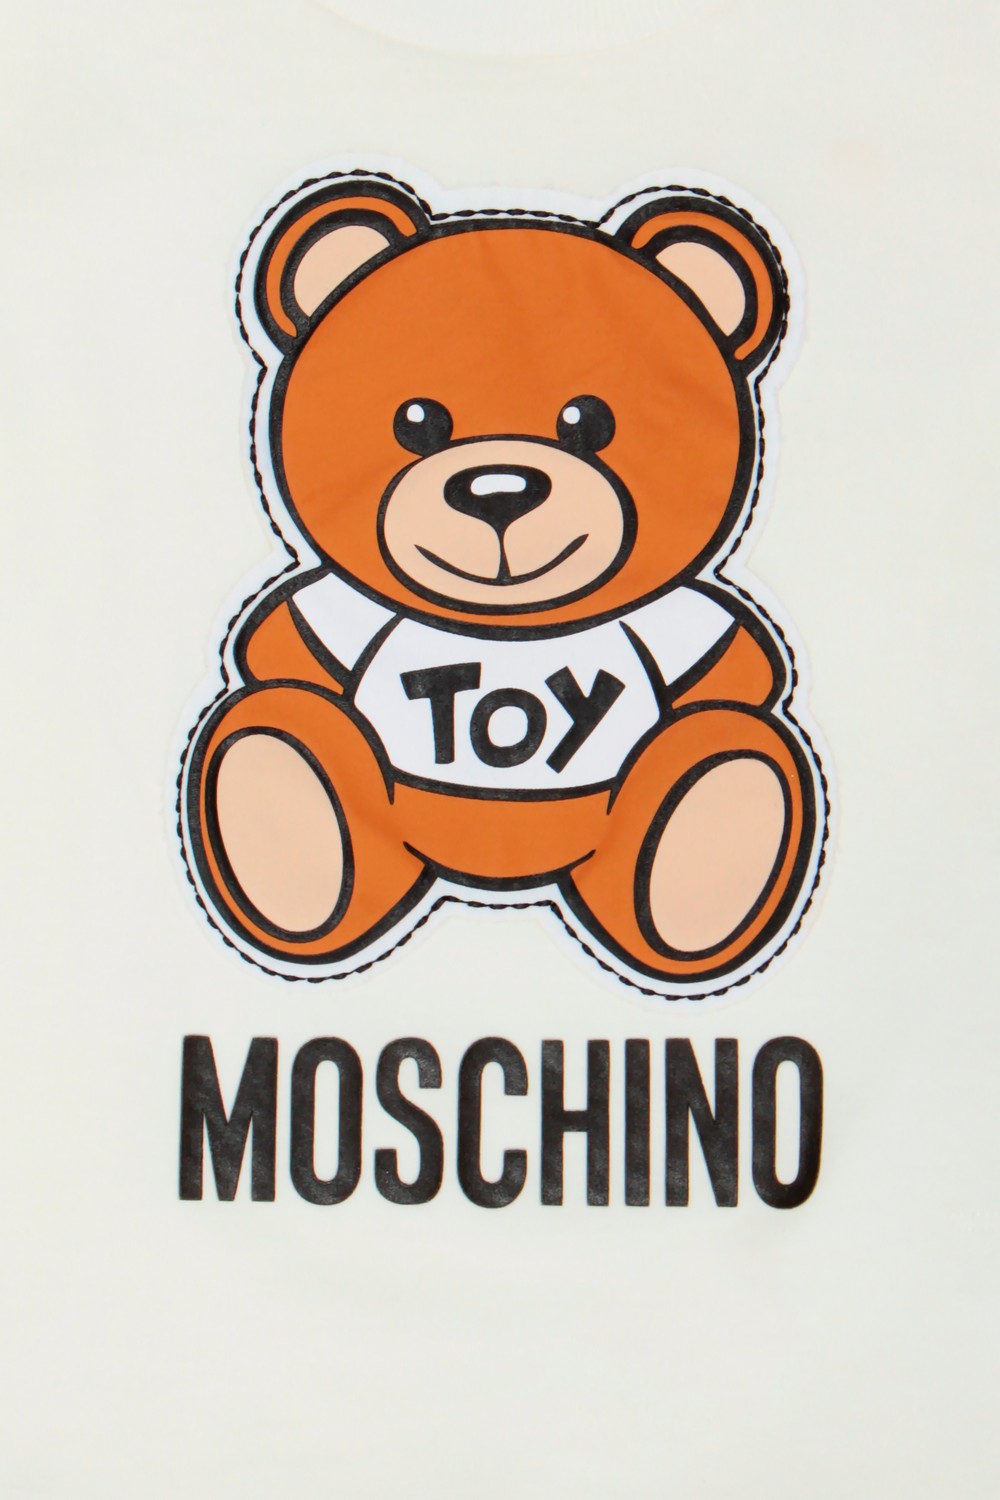 Moschino Однотонная футболка с принтом "Teddy Bear"